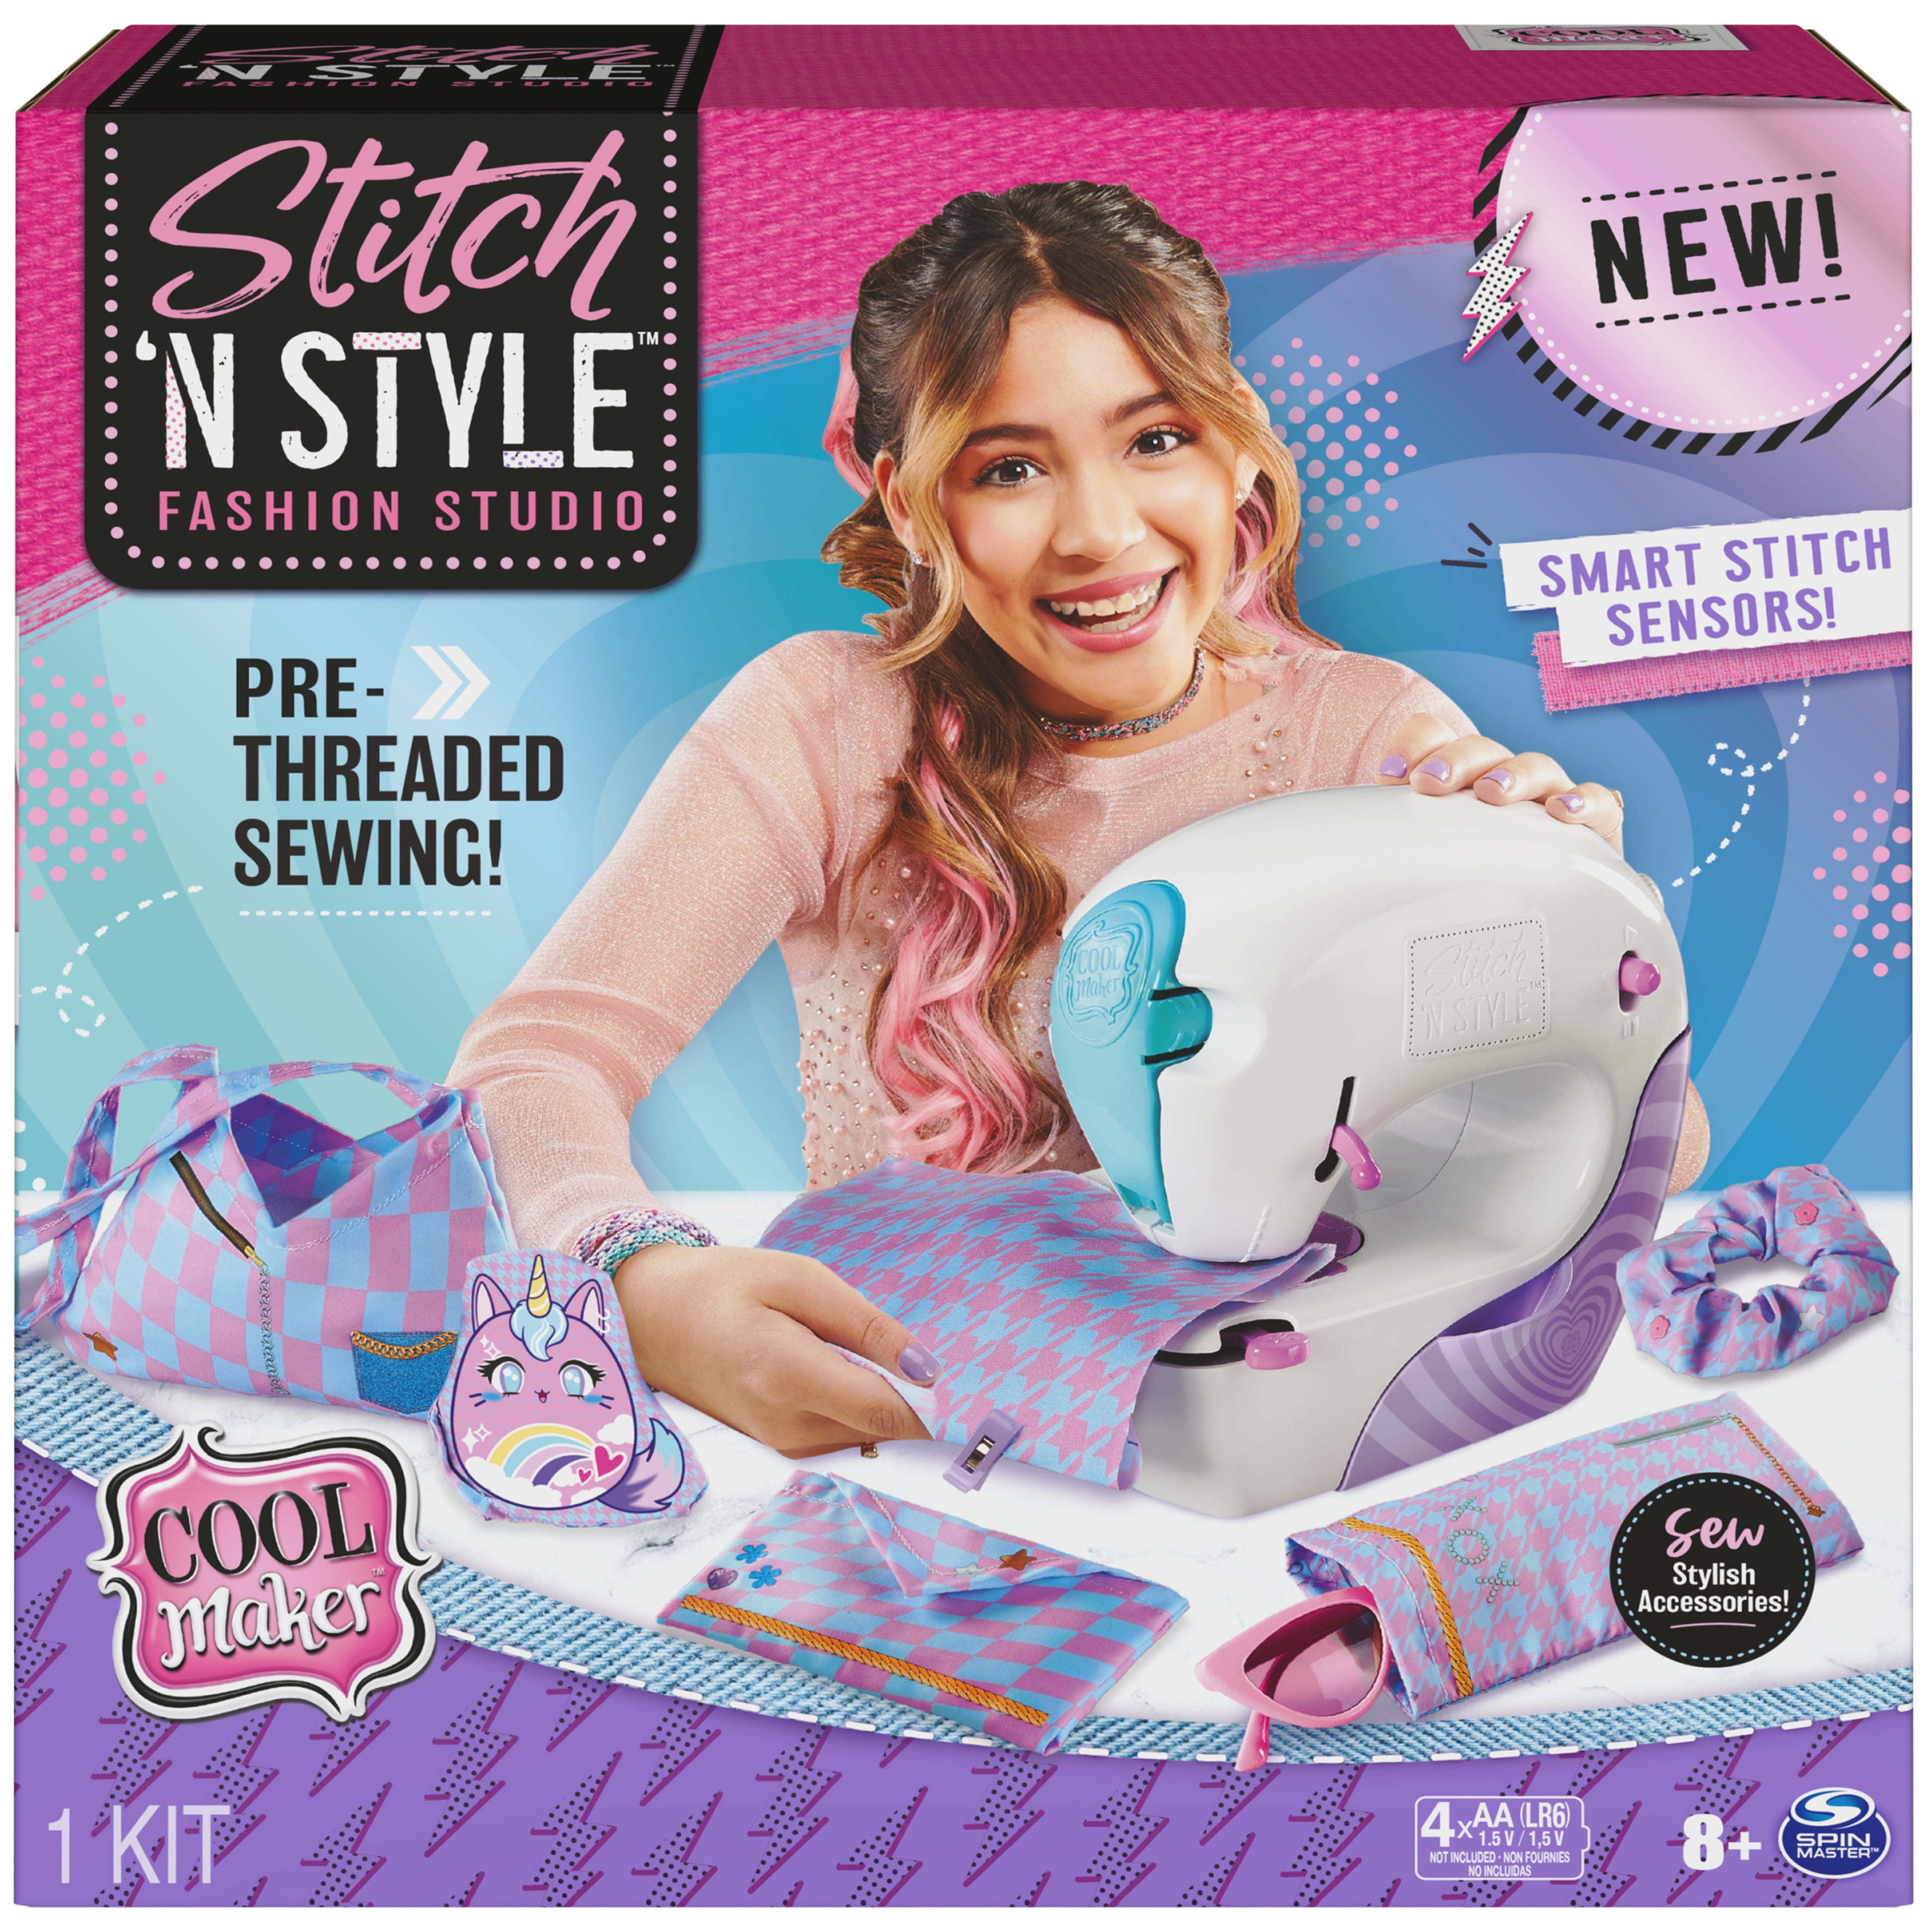 Cool Maker Stitch ‘N Style Fashion Studio, Pre-Threaded Sewing Machine